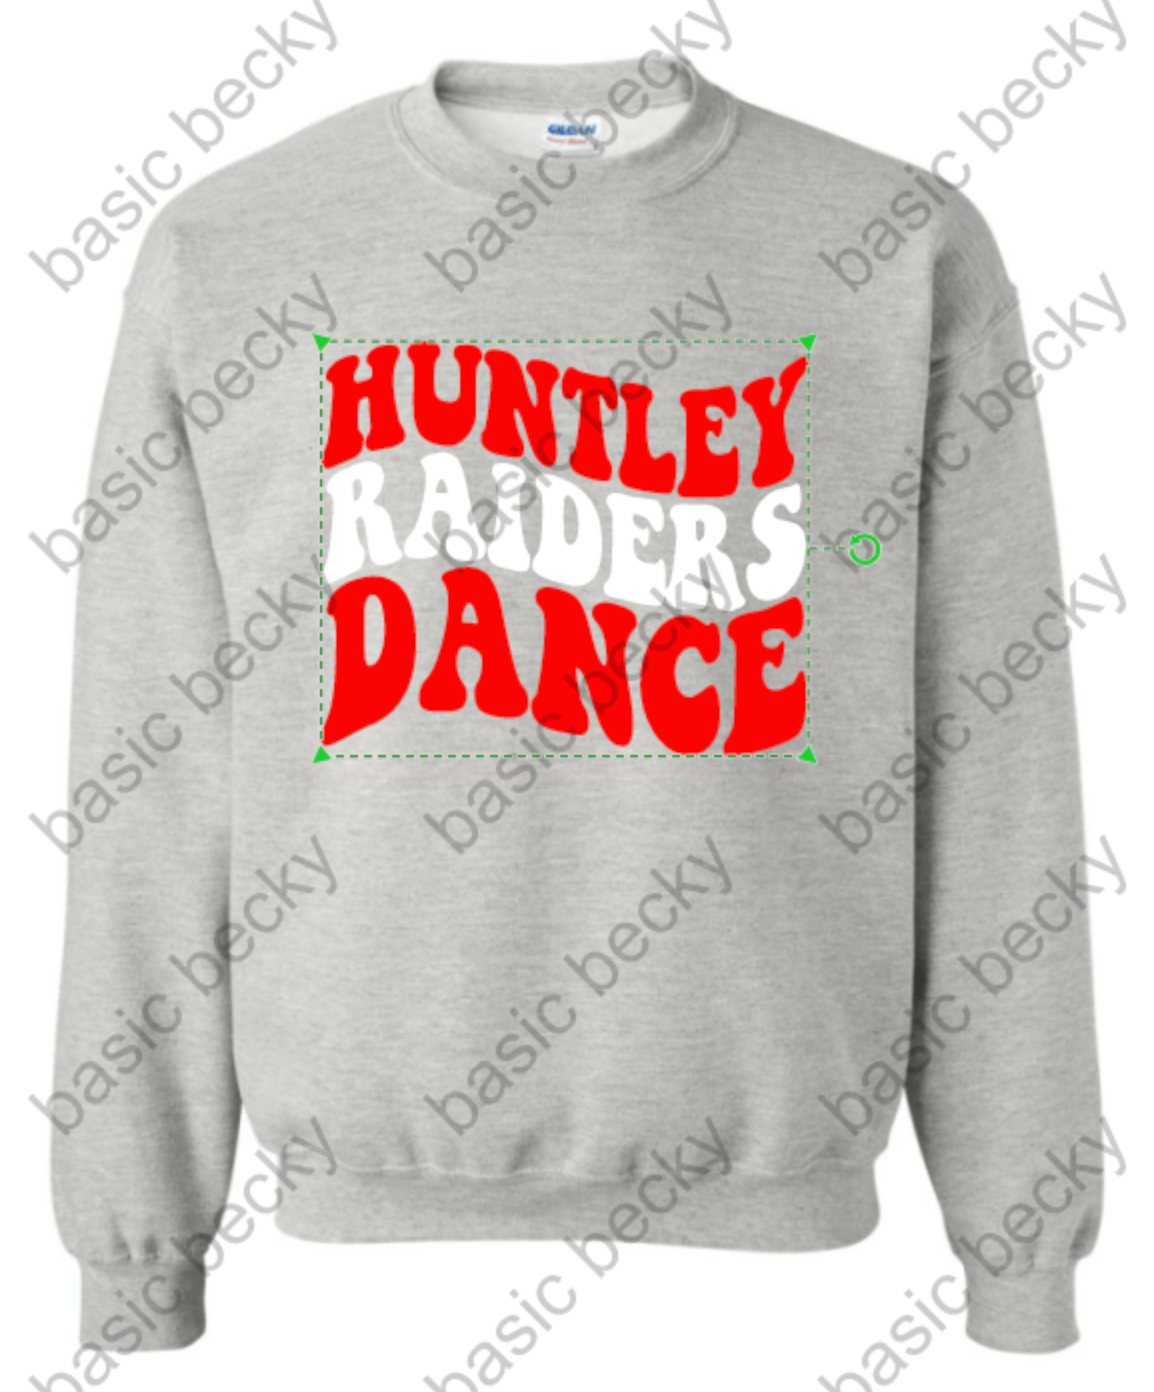 HUNTLEY RAIDERS DANCE